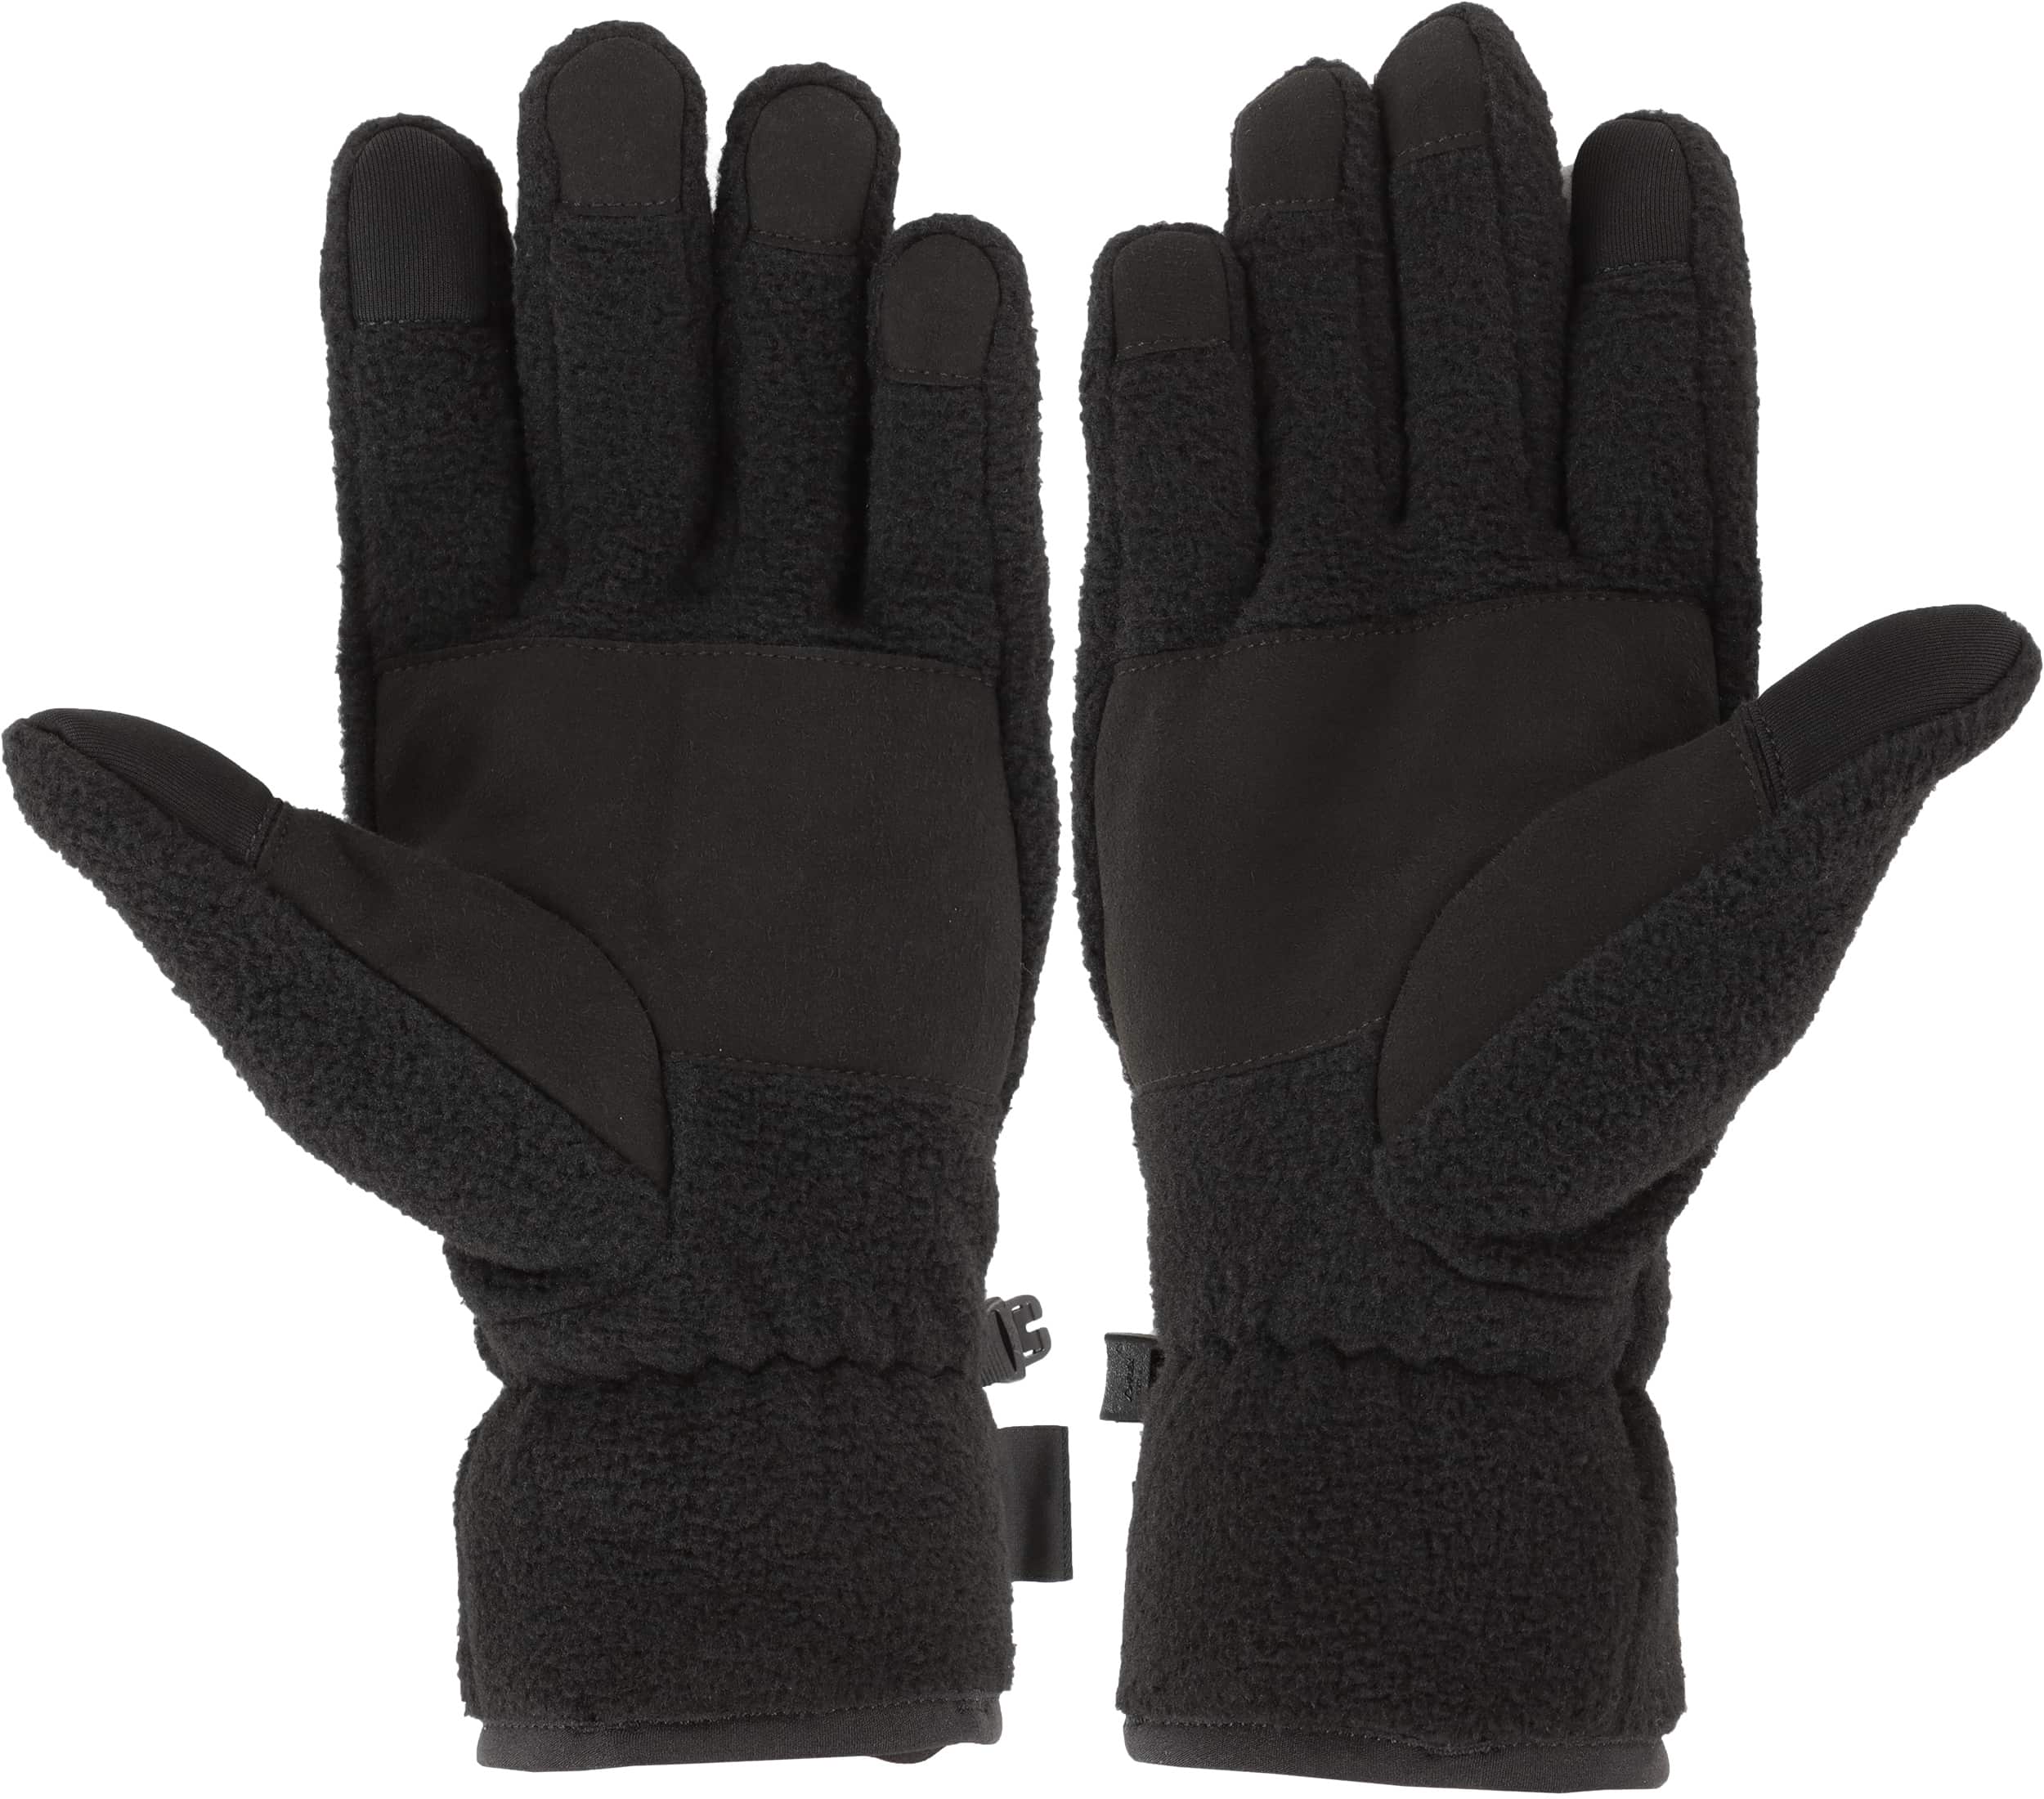 Patagonia Synch Fleece Liner Gloves - black | Tactics